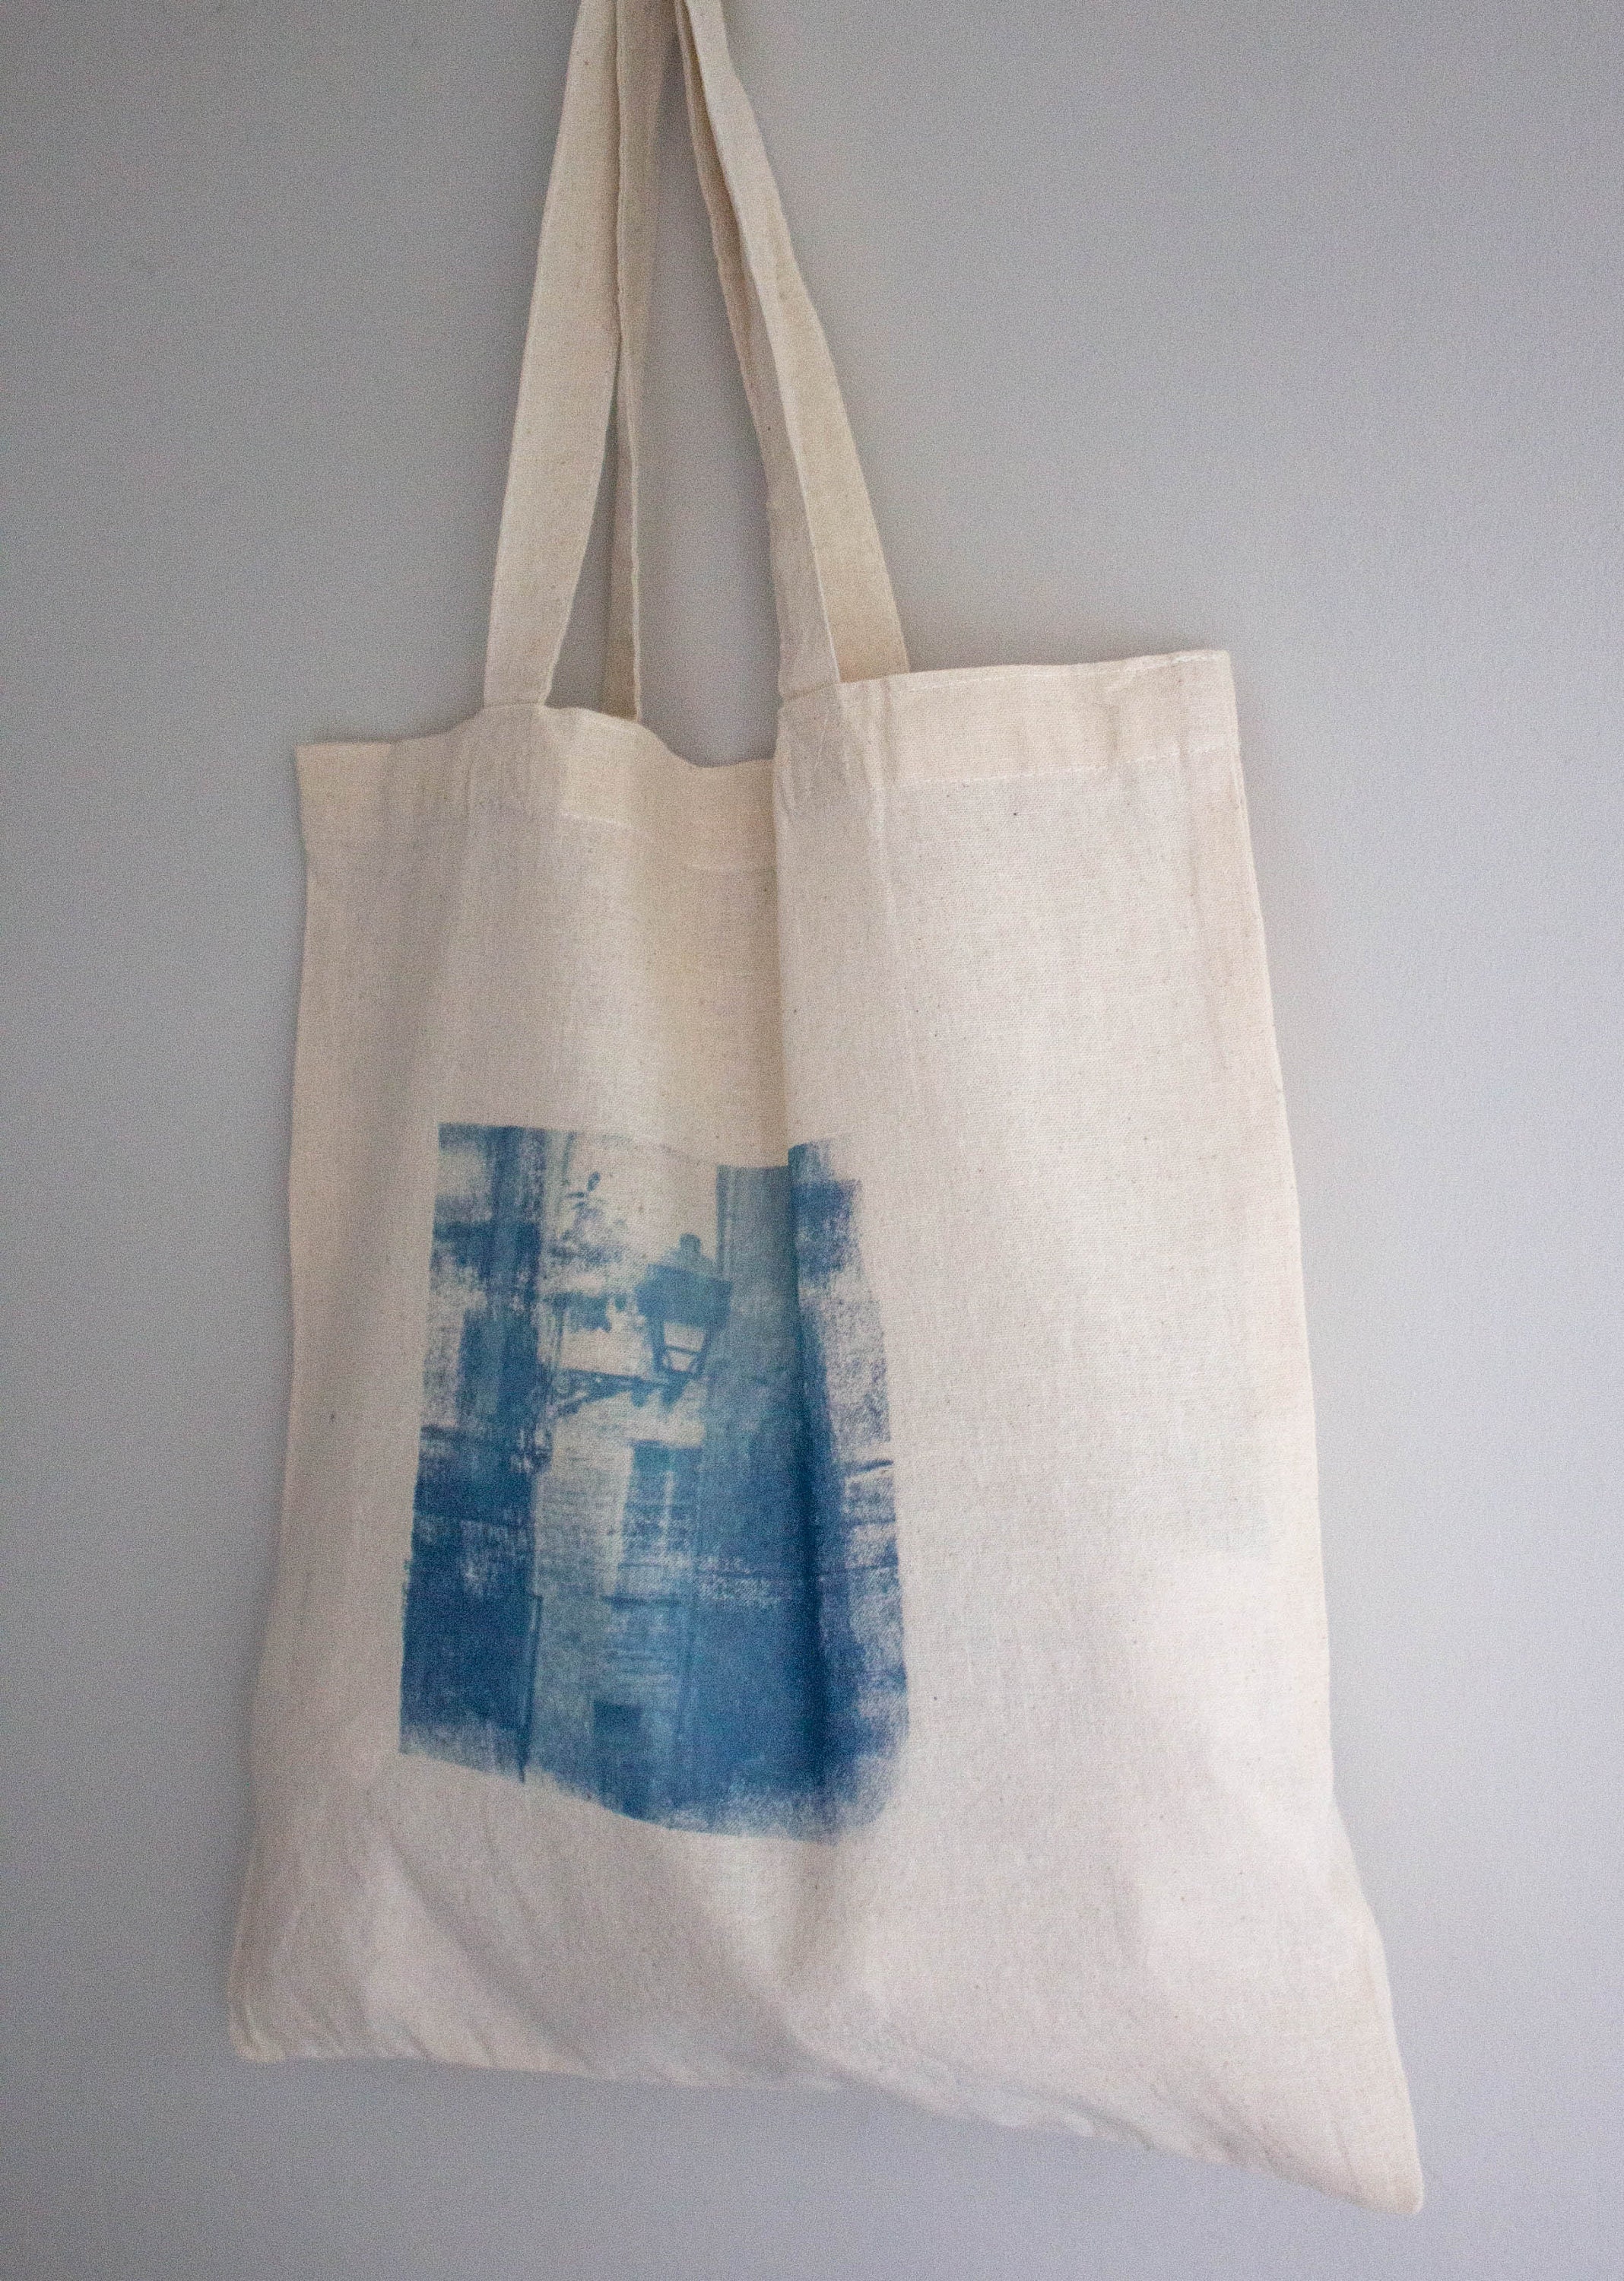 Cyanotype tote bag Handprinted shopping bag Gothic print | Etsy